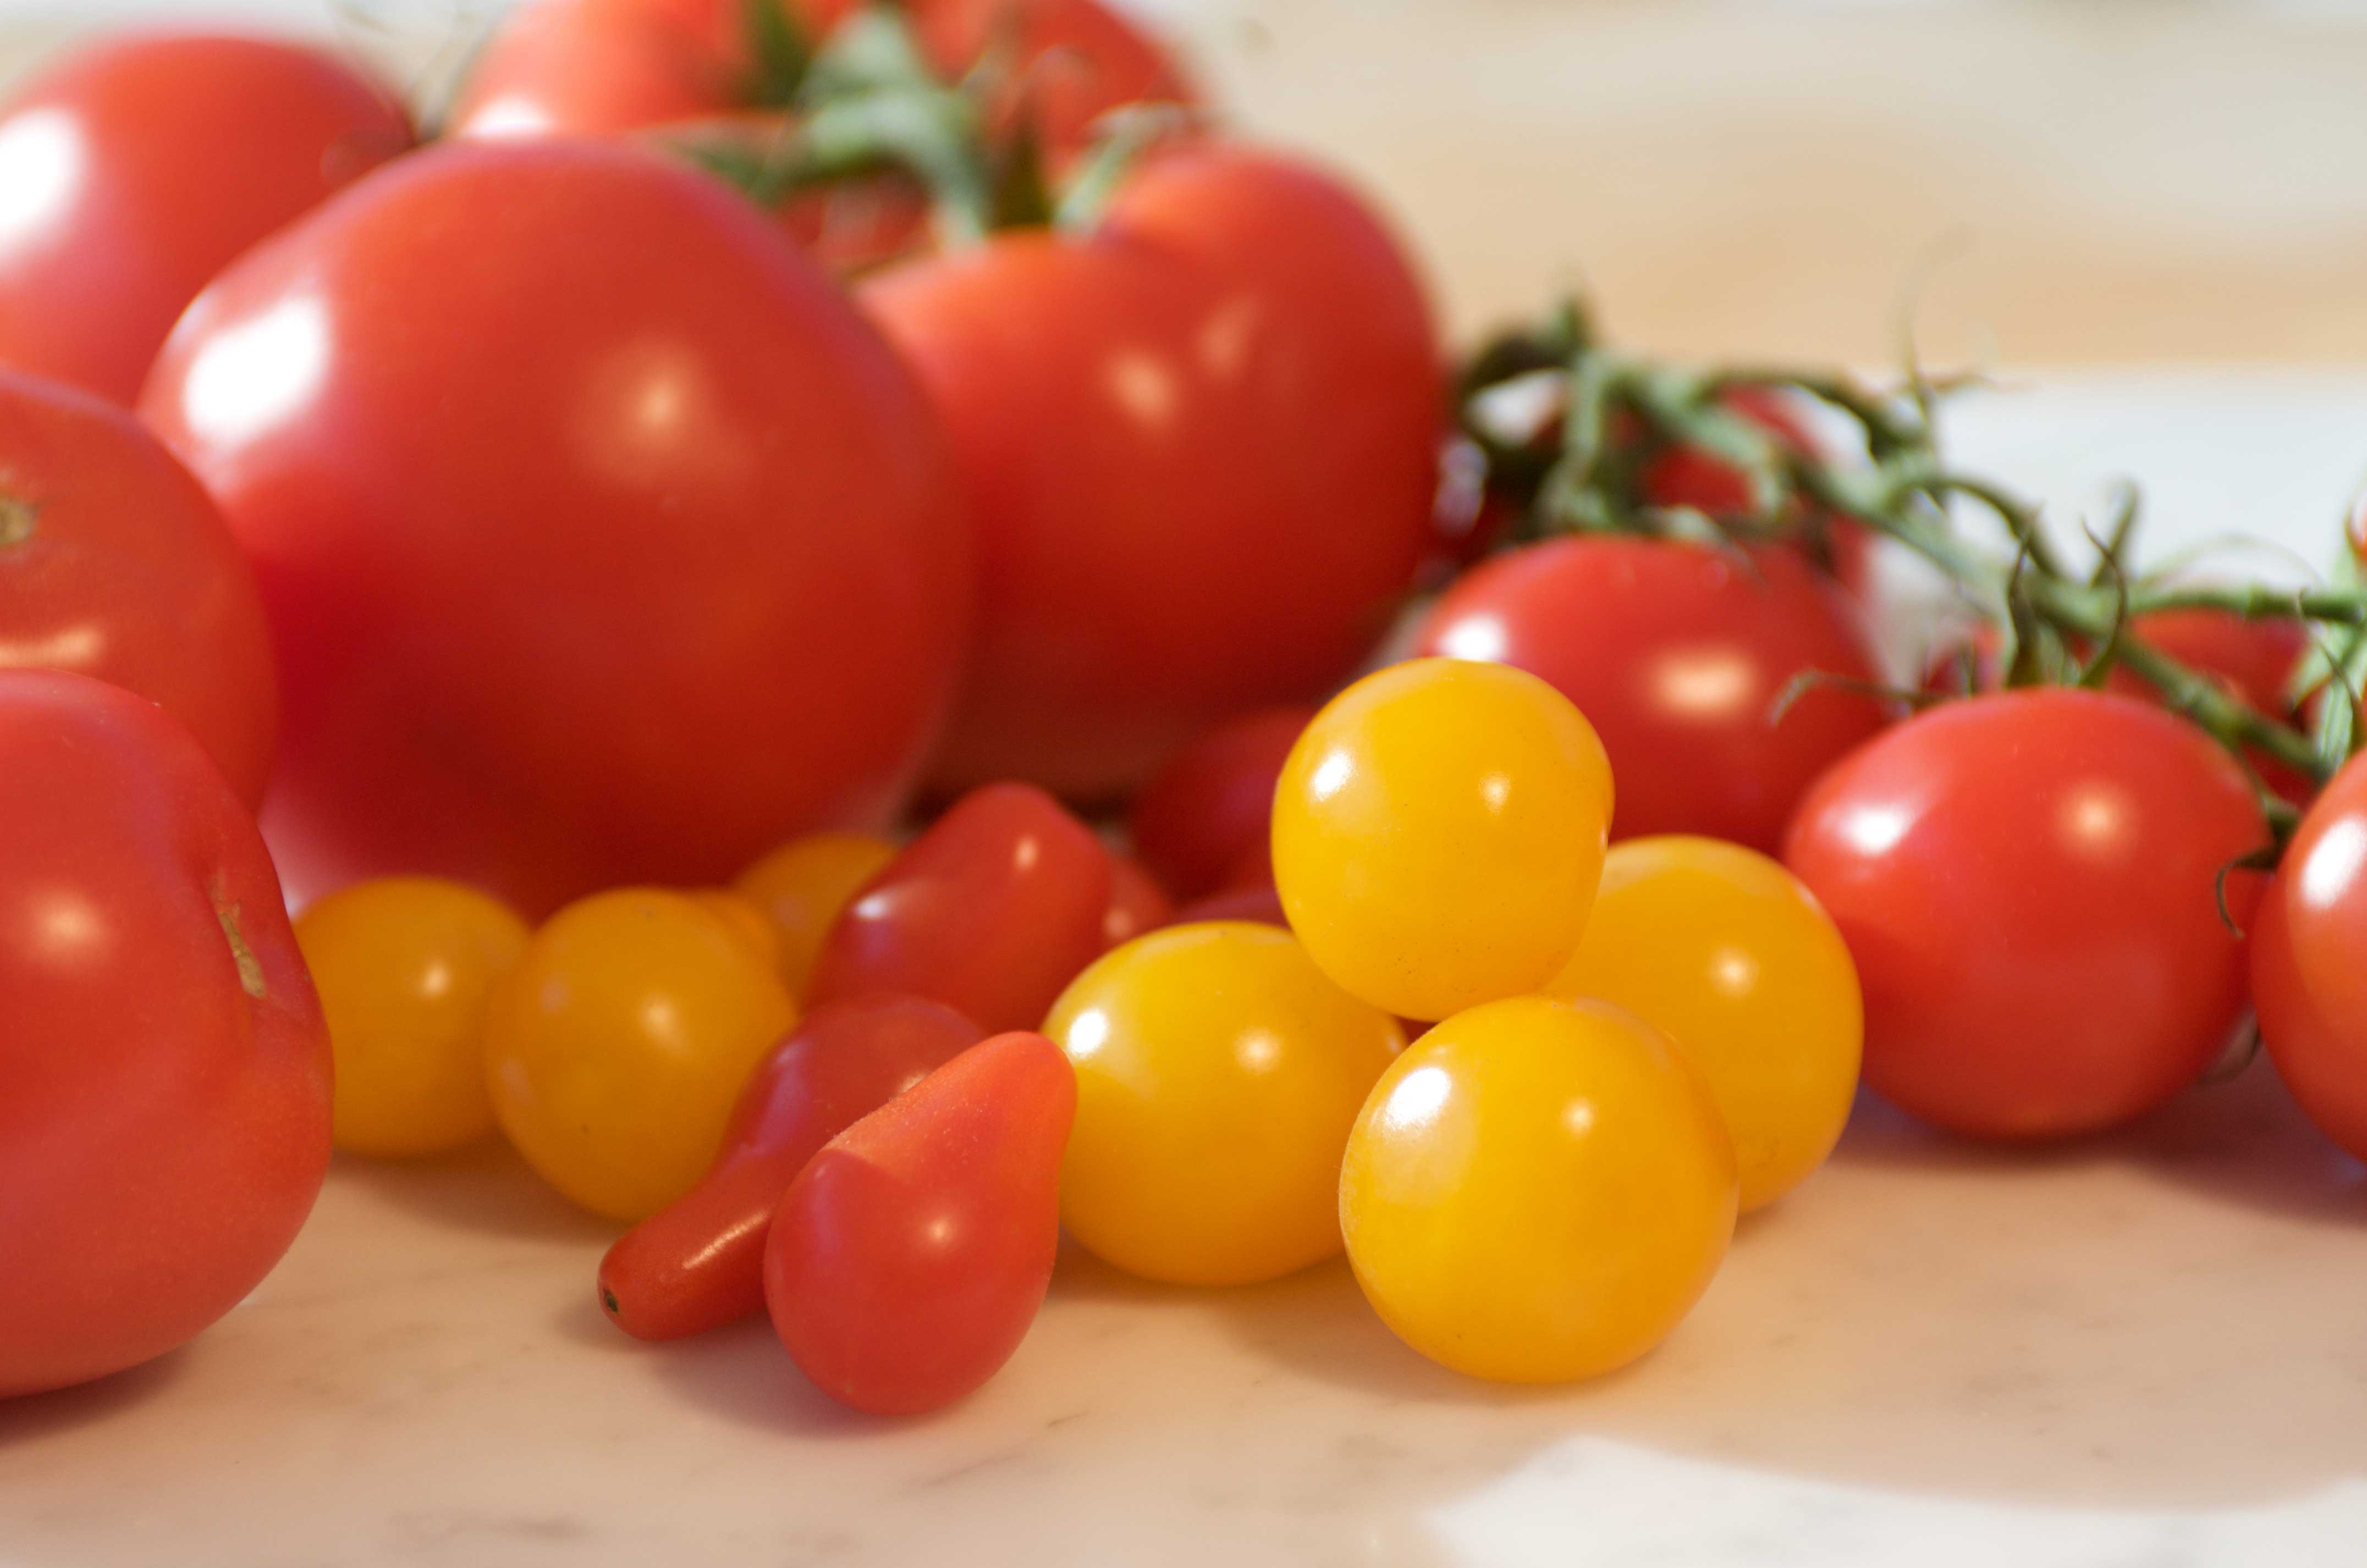 1-Tomatoes-DSC_5338